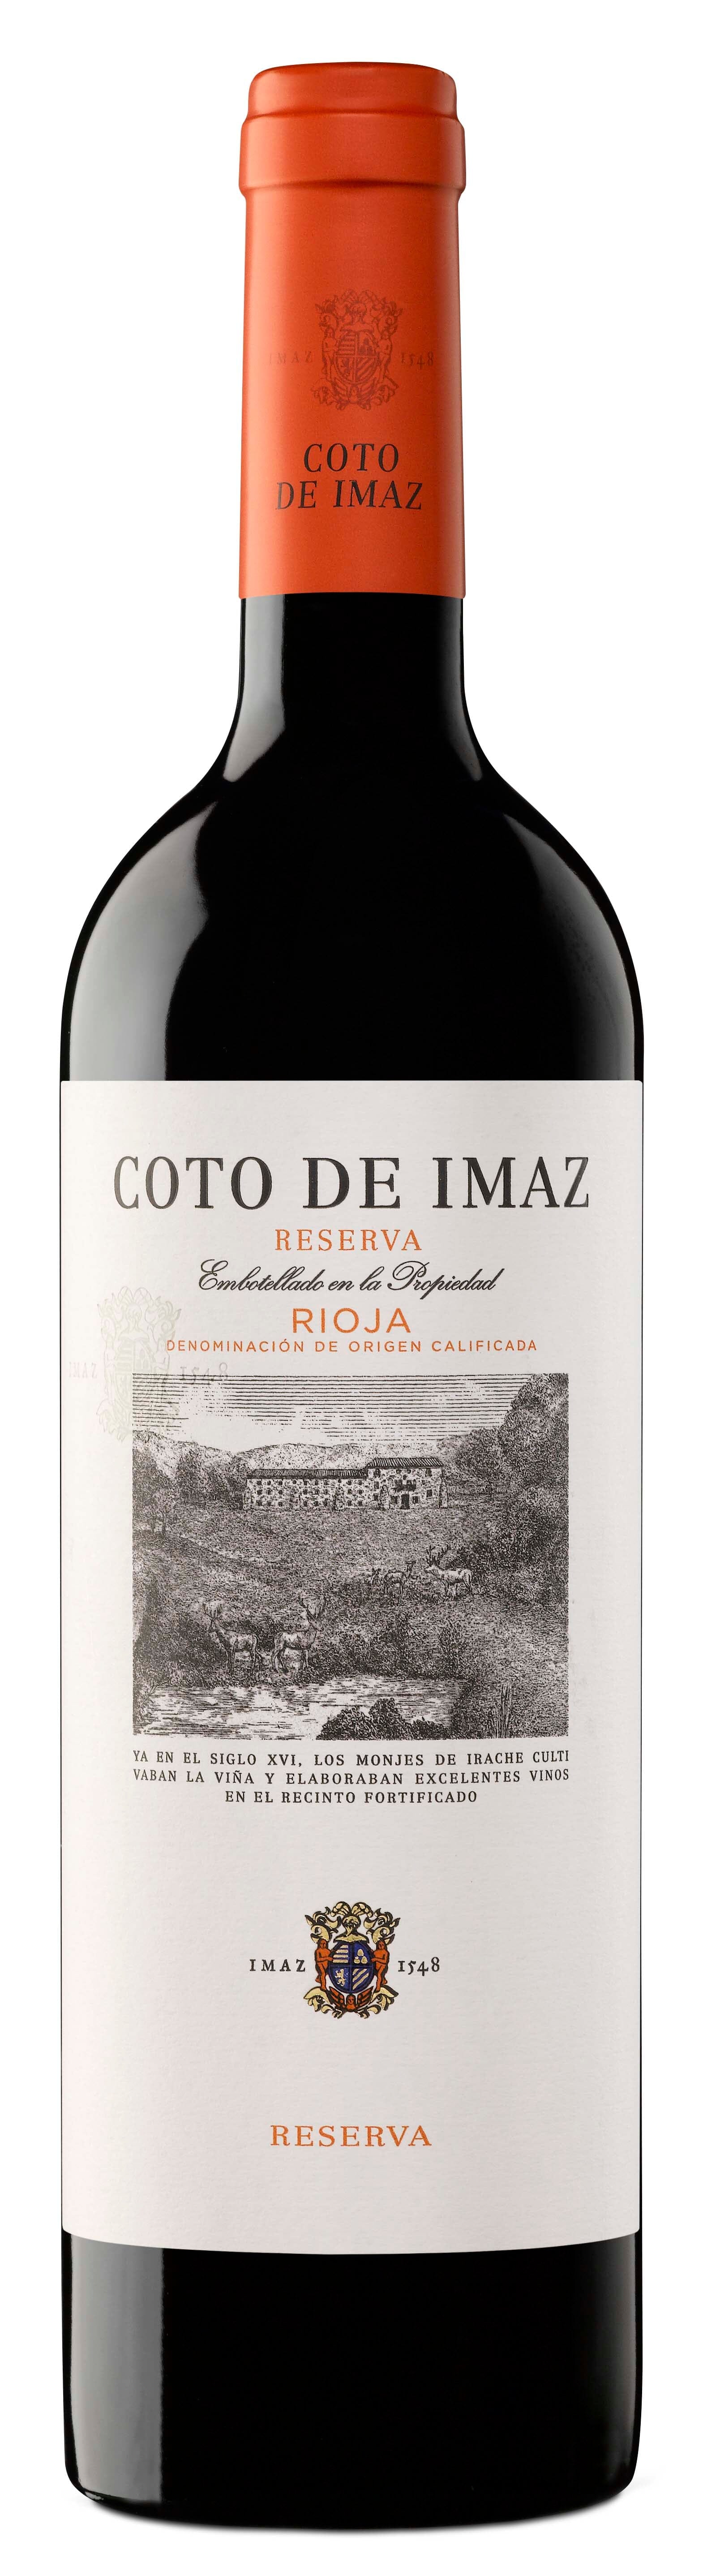 El Coto, "Coto de Imaz", Rioja Reserva Wine Bottle Liberty Wines 